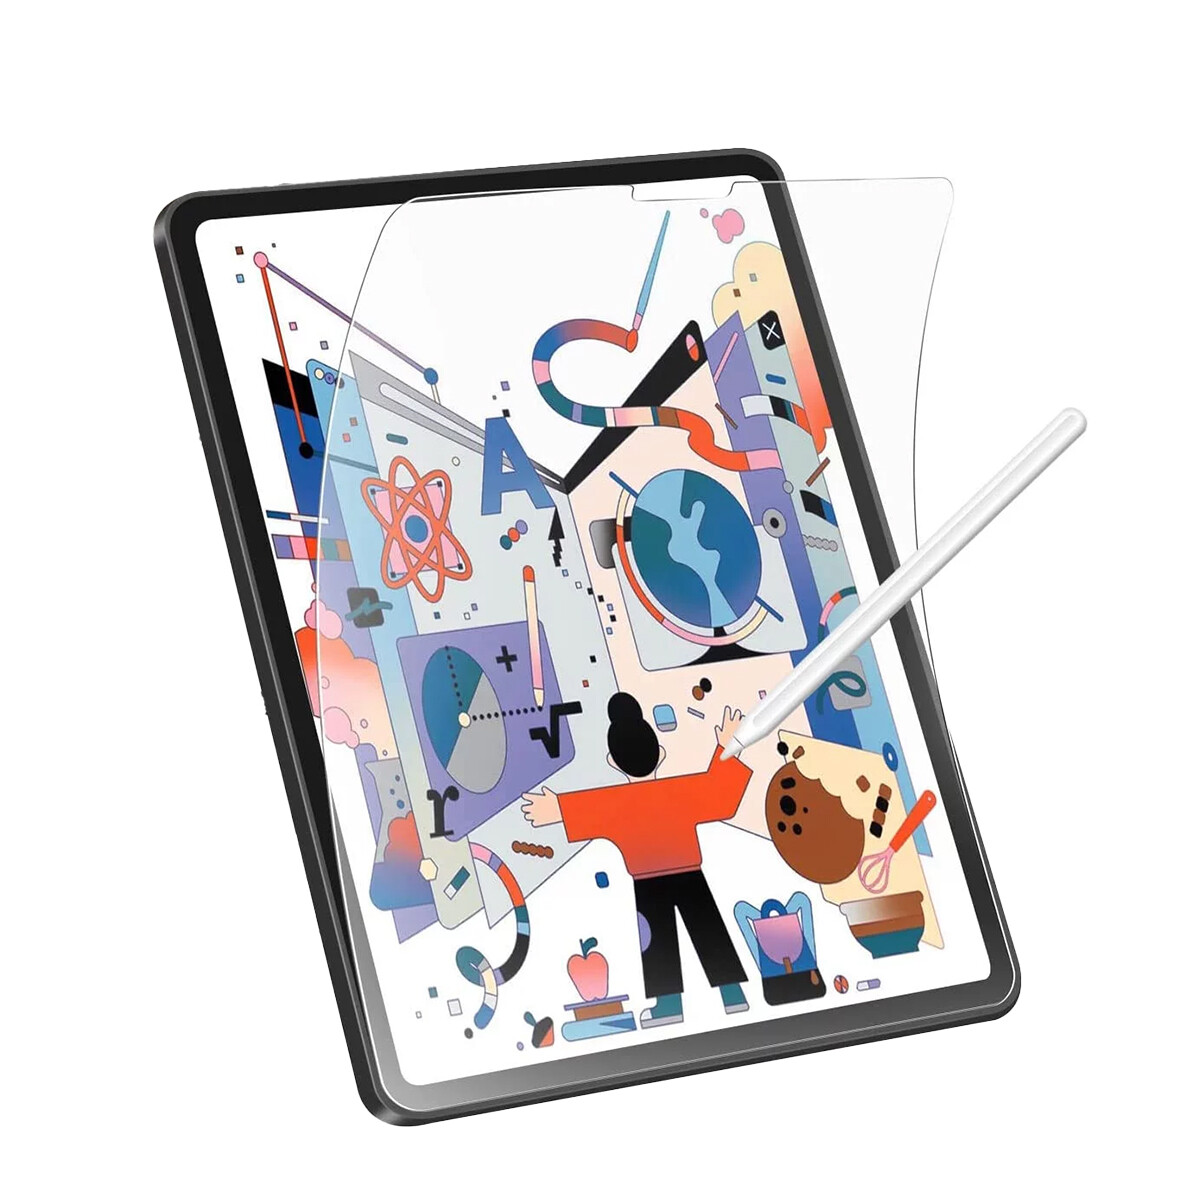 Protector de Pantalla Mate Textura Papel PaperFeel 8.3" para iPad Mini 6th Generation - Transparente 